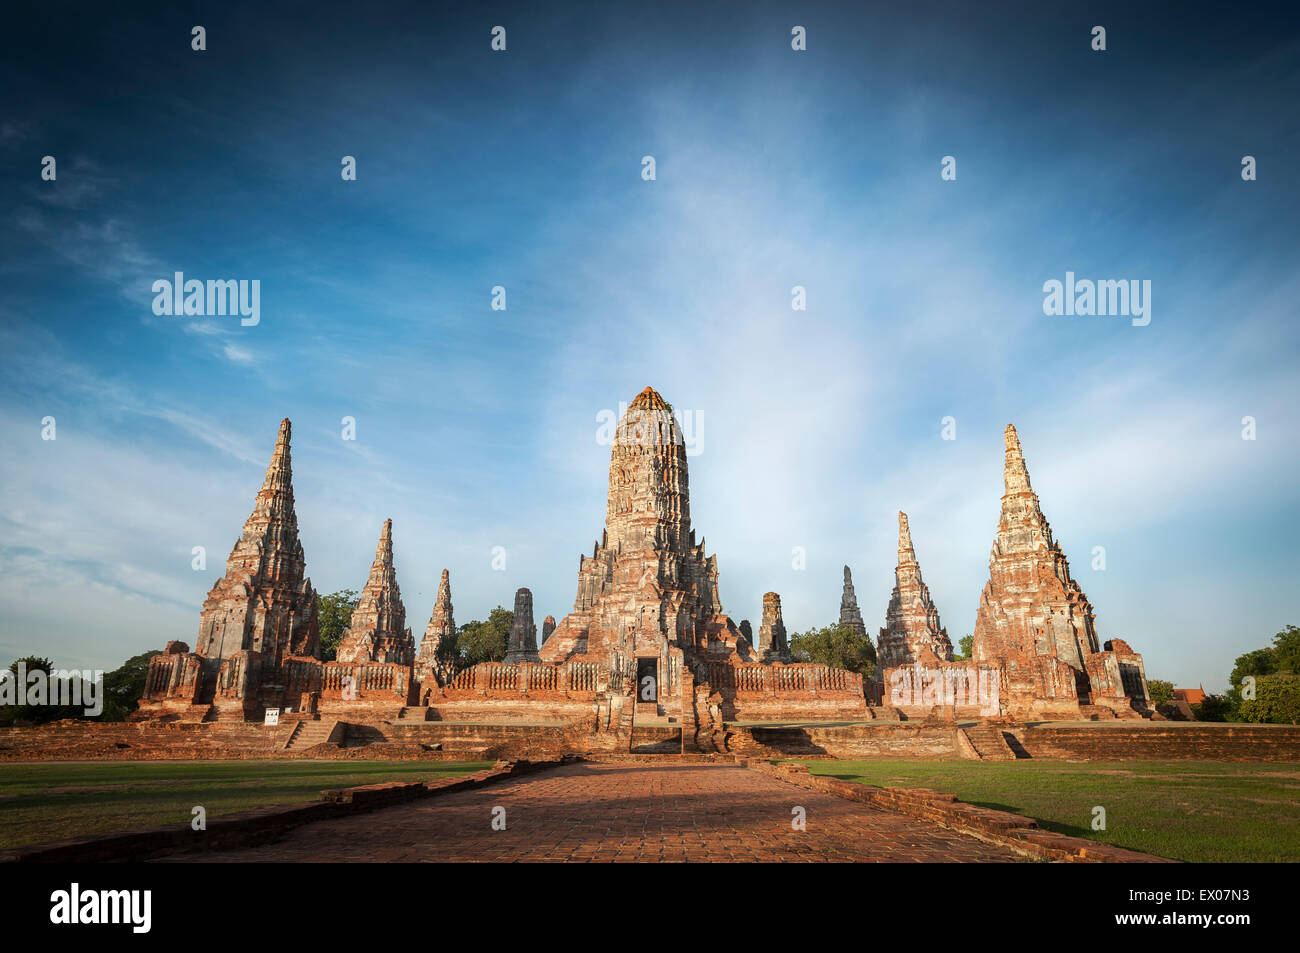 Wat Chaiwatthanaram buddhist temple, Ayutthaya, Thailand Stock Photo